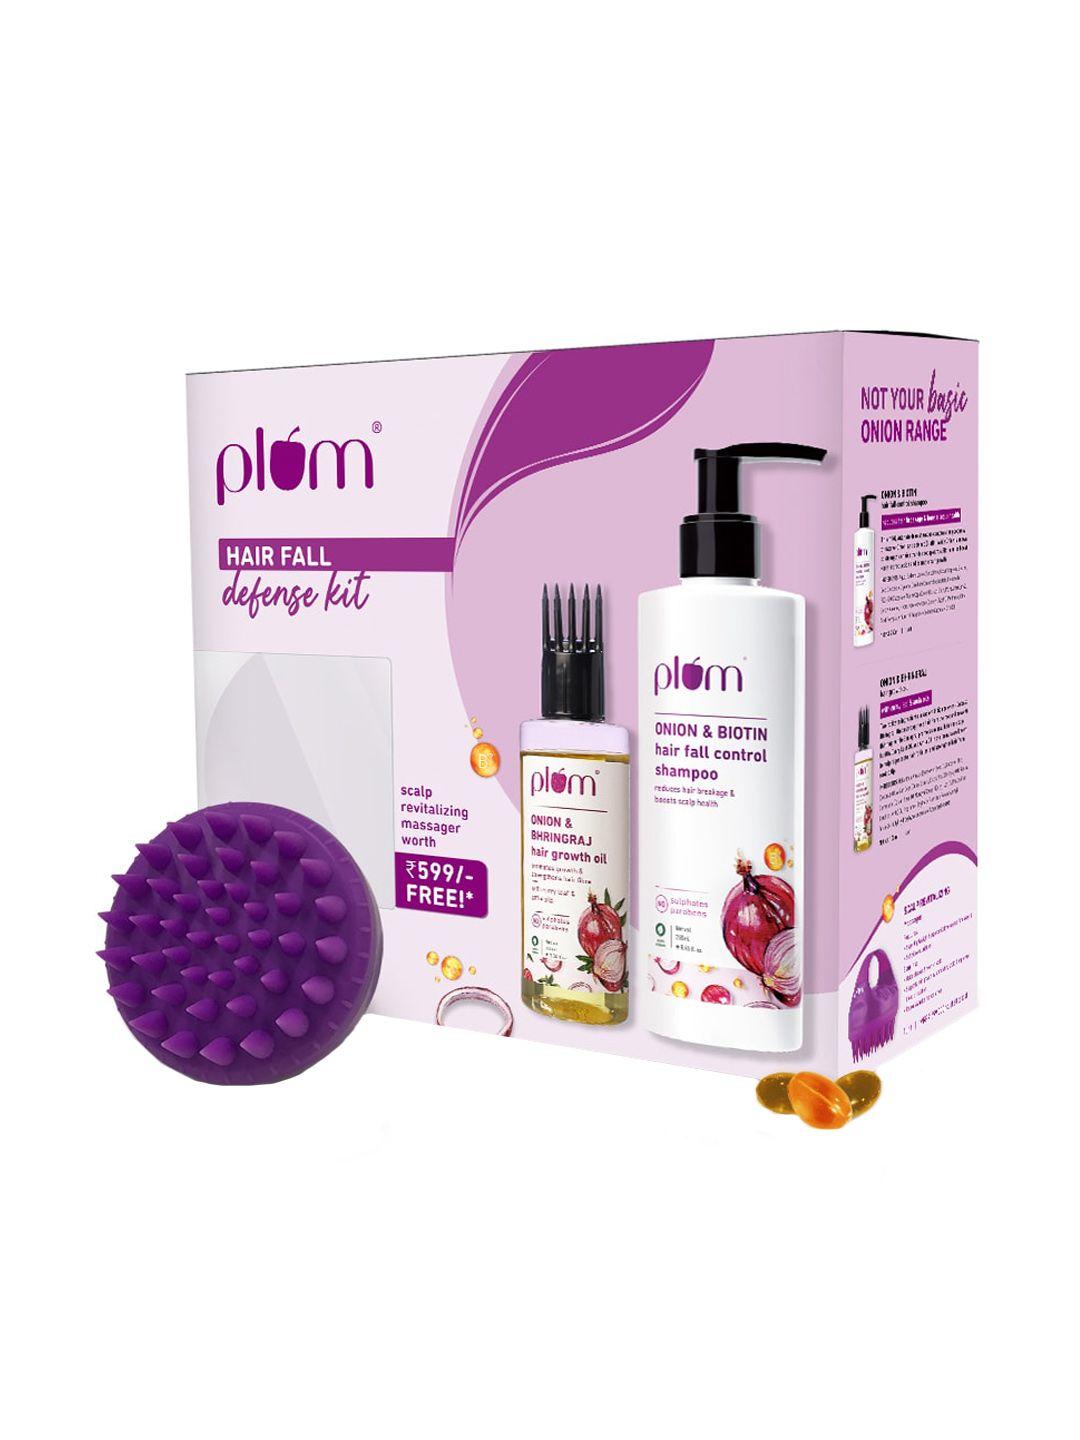 plum hairfall defense kit 350ml with free scalp revitalizing massager